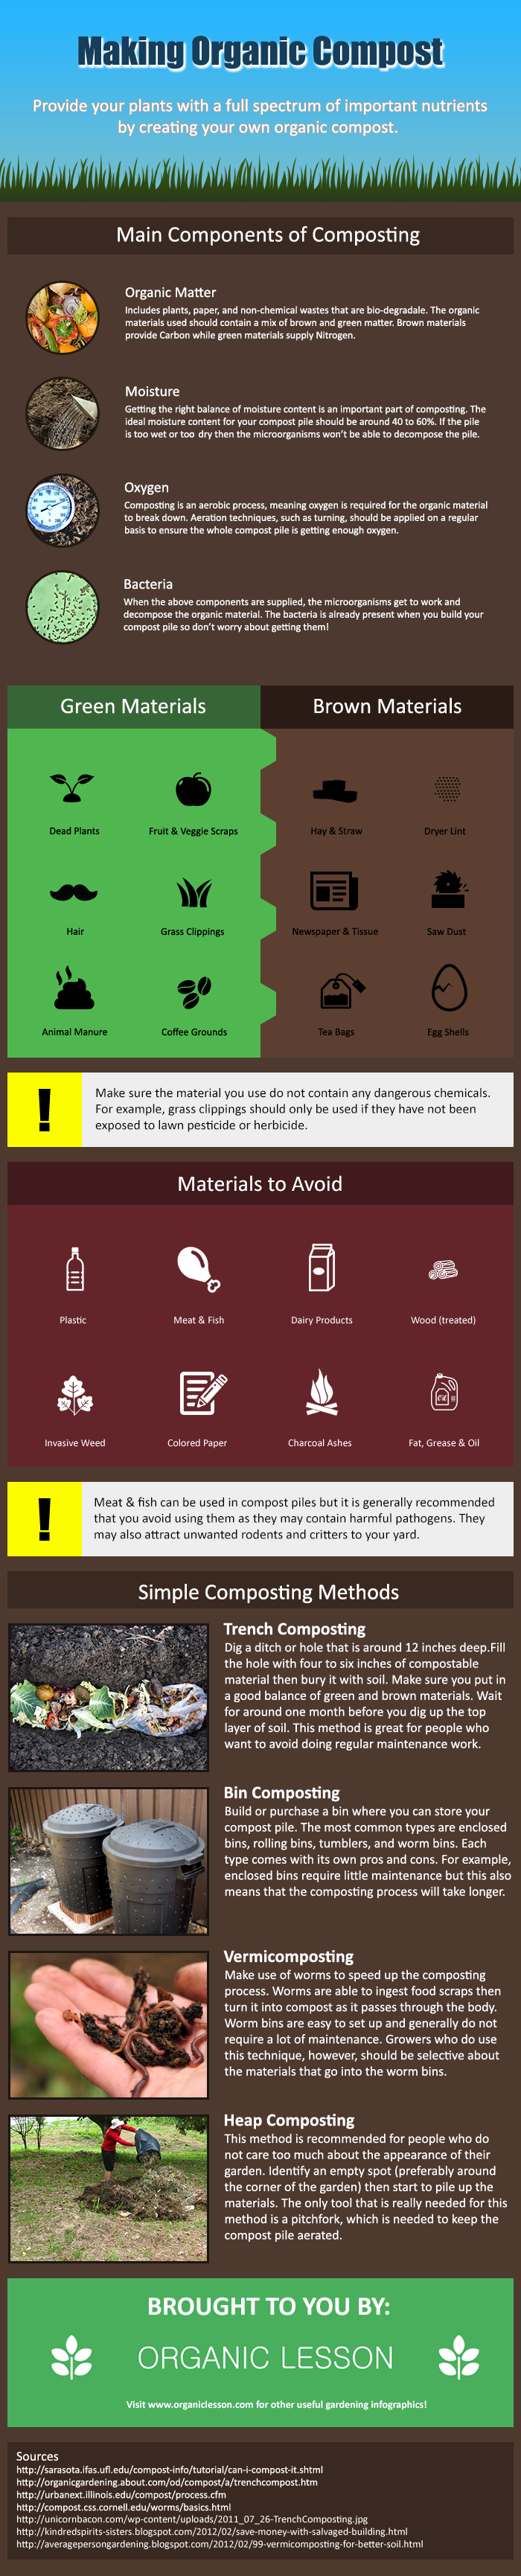 organic composting methods infographic